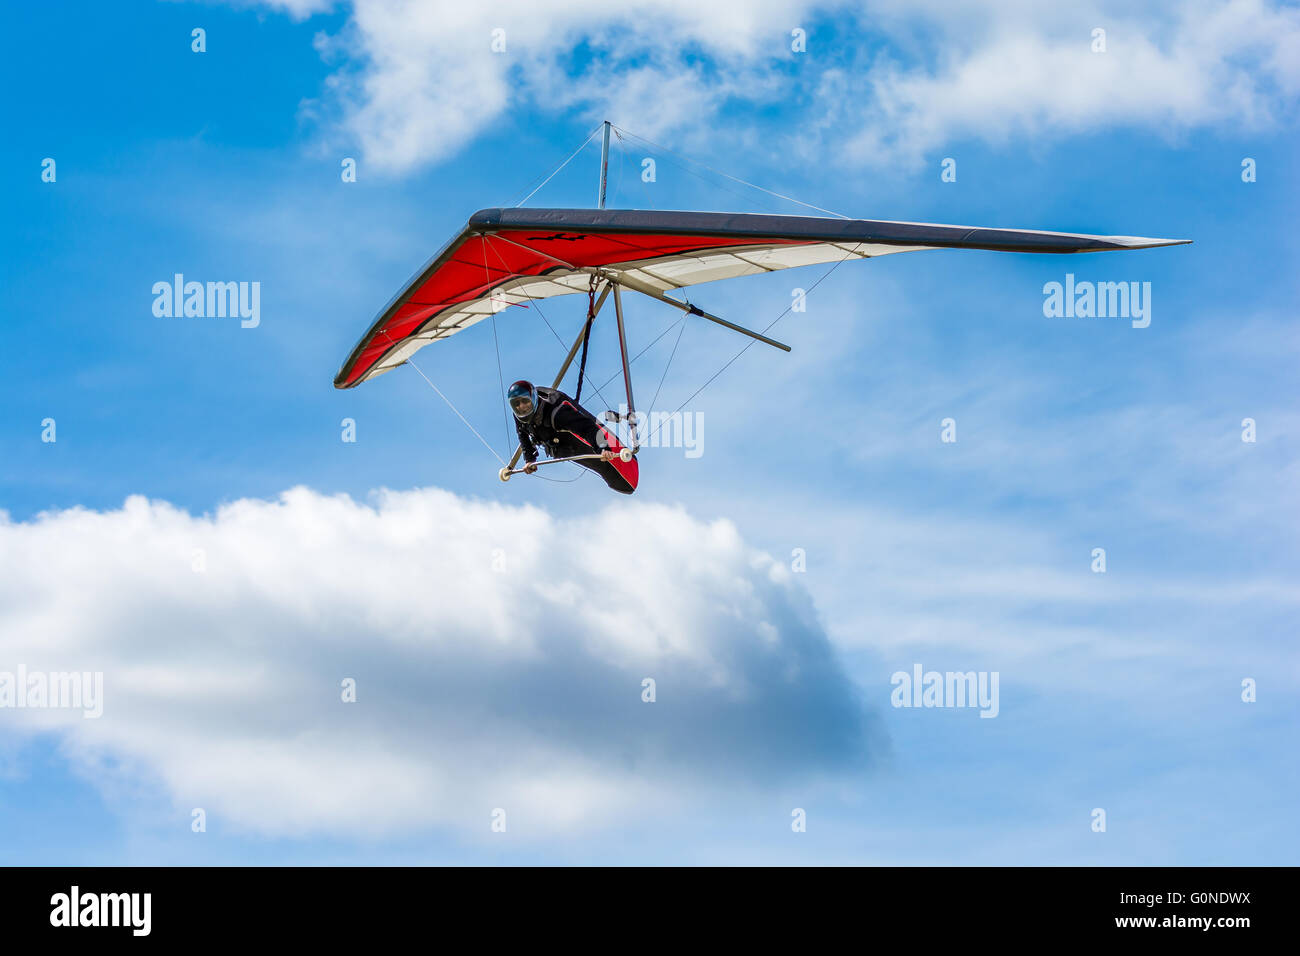 Diego Calderoni riding the thermals high above Hammett Idaho Stock Photo